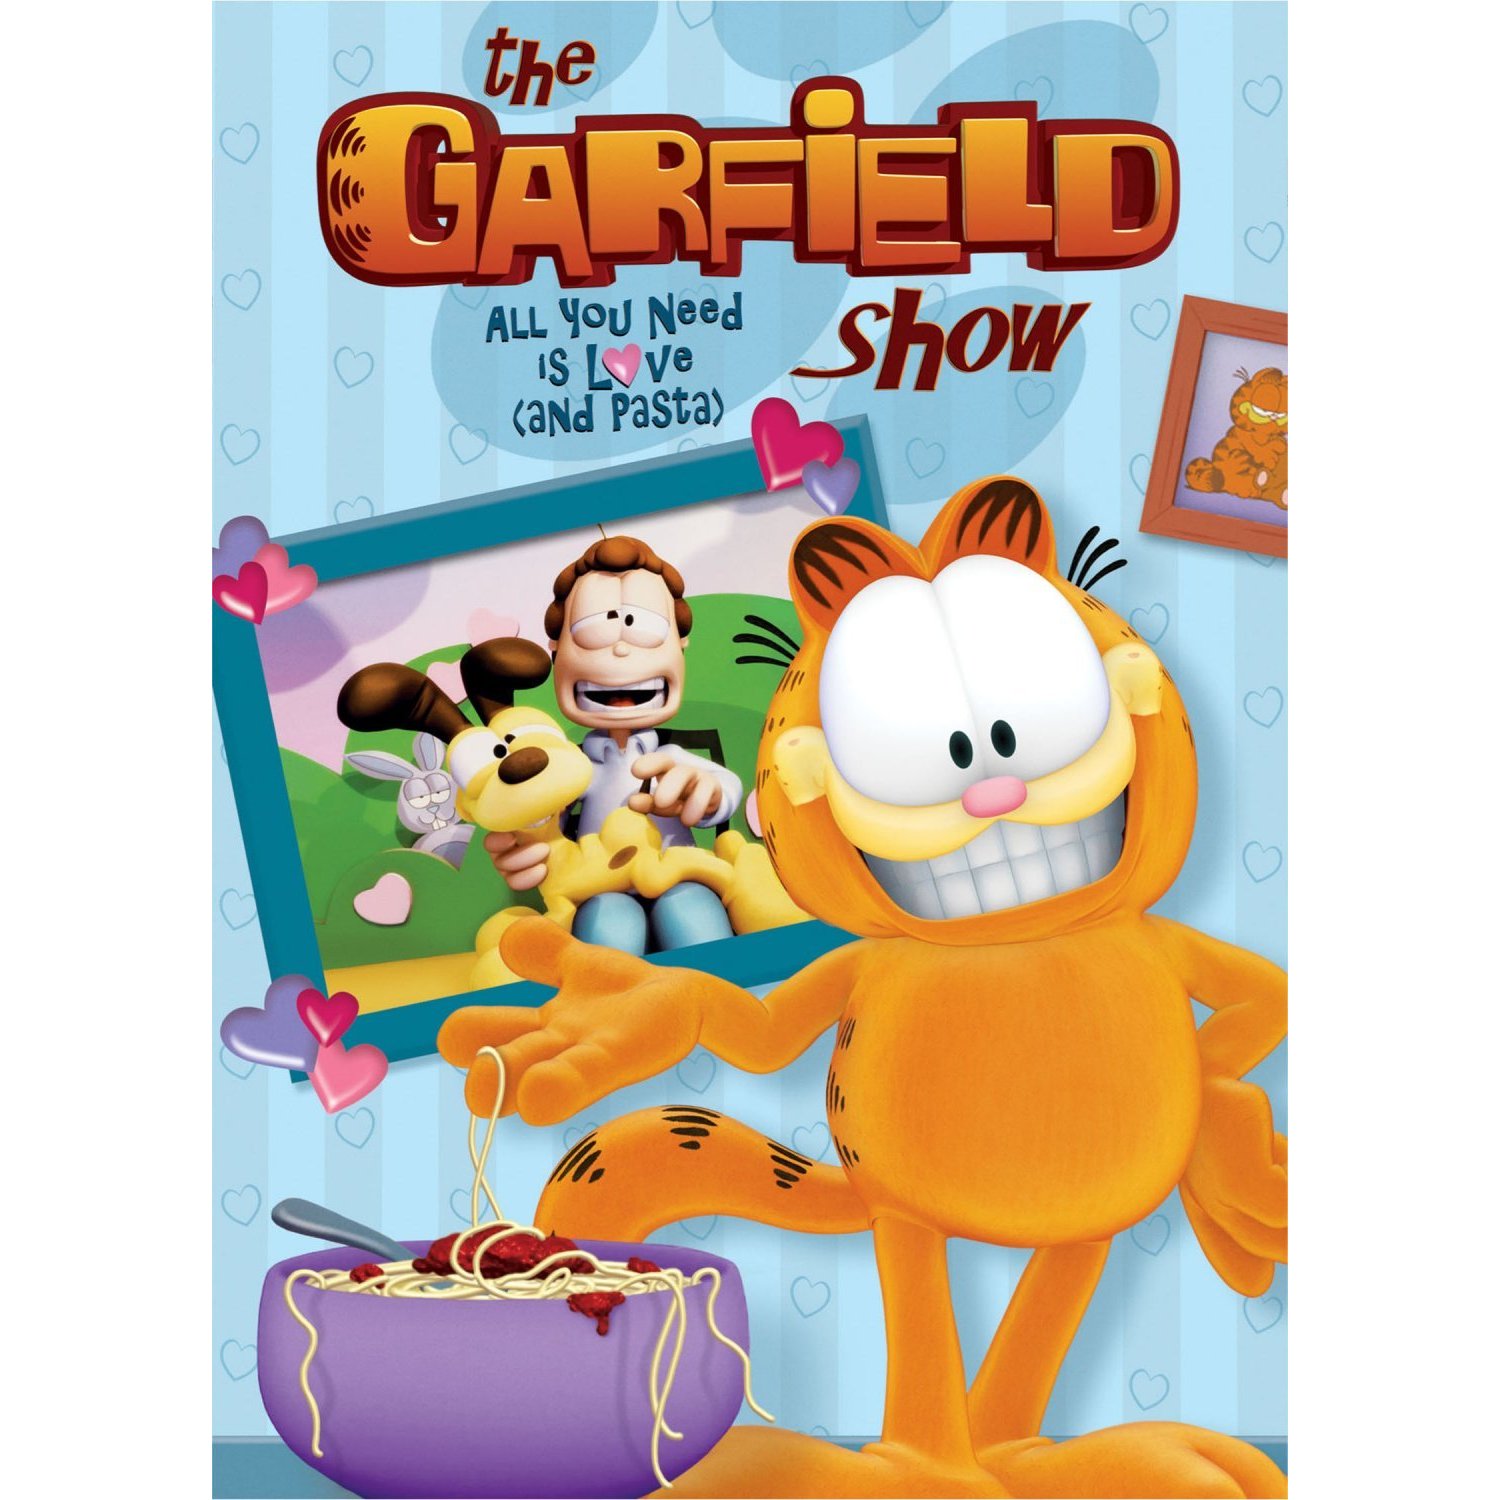 The Garfield Show movie